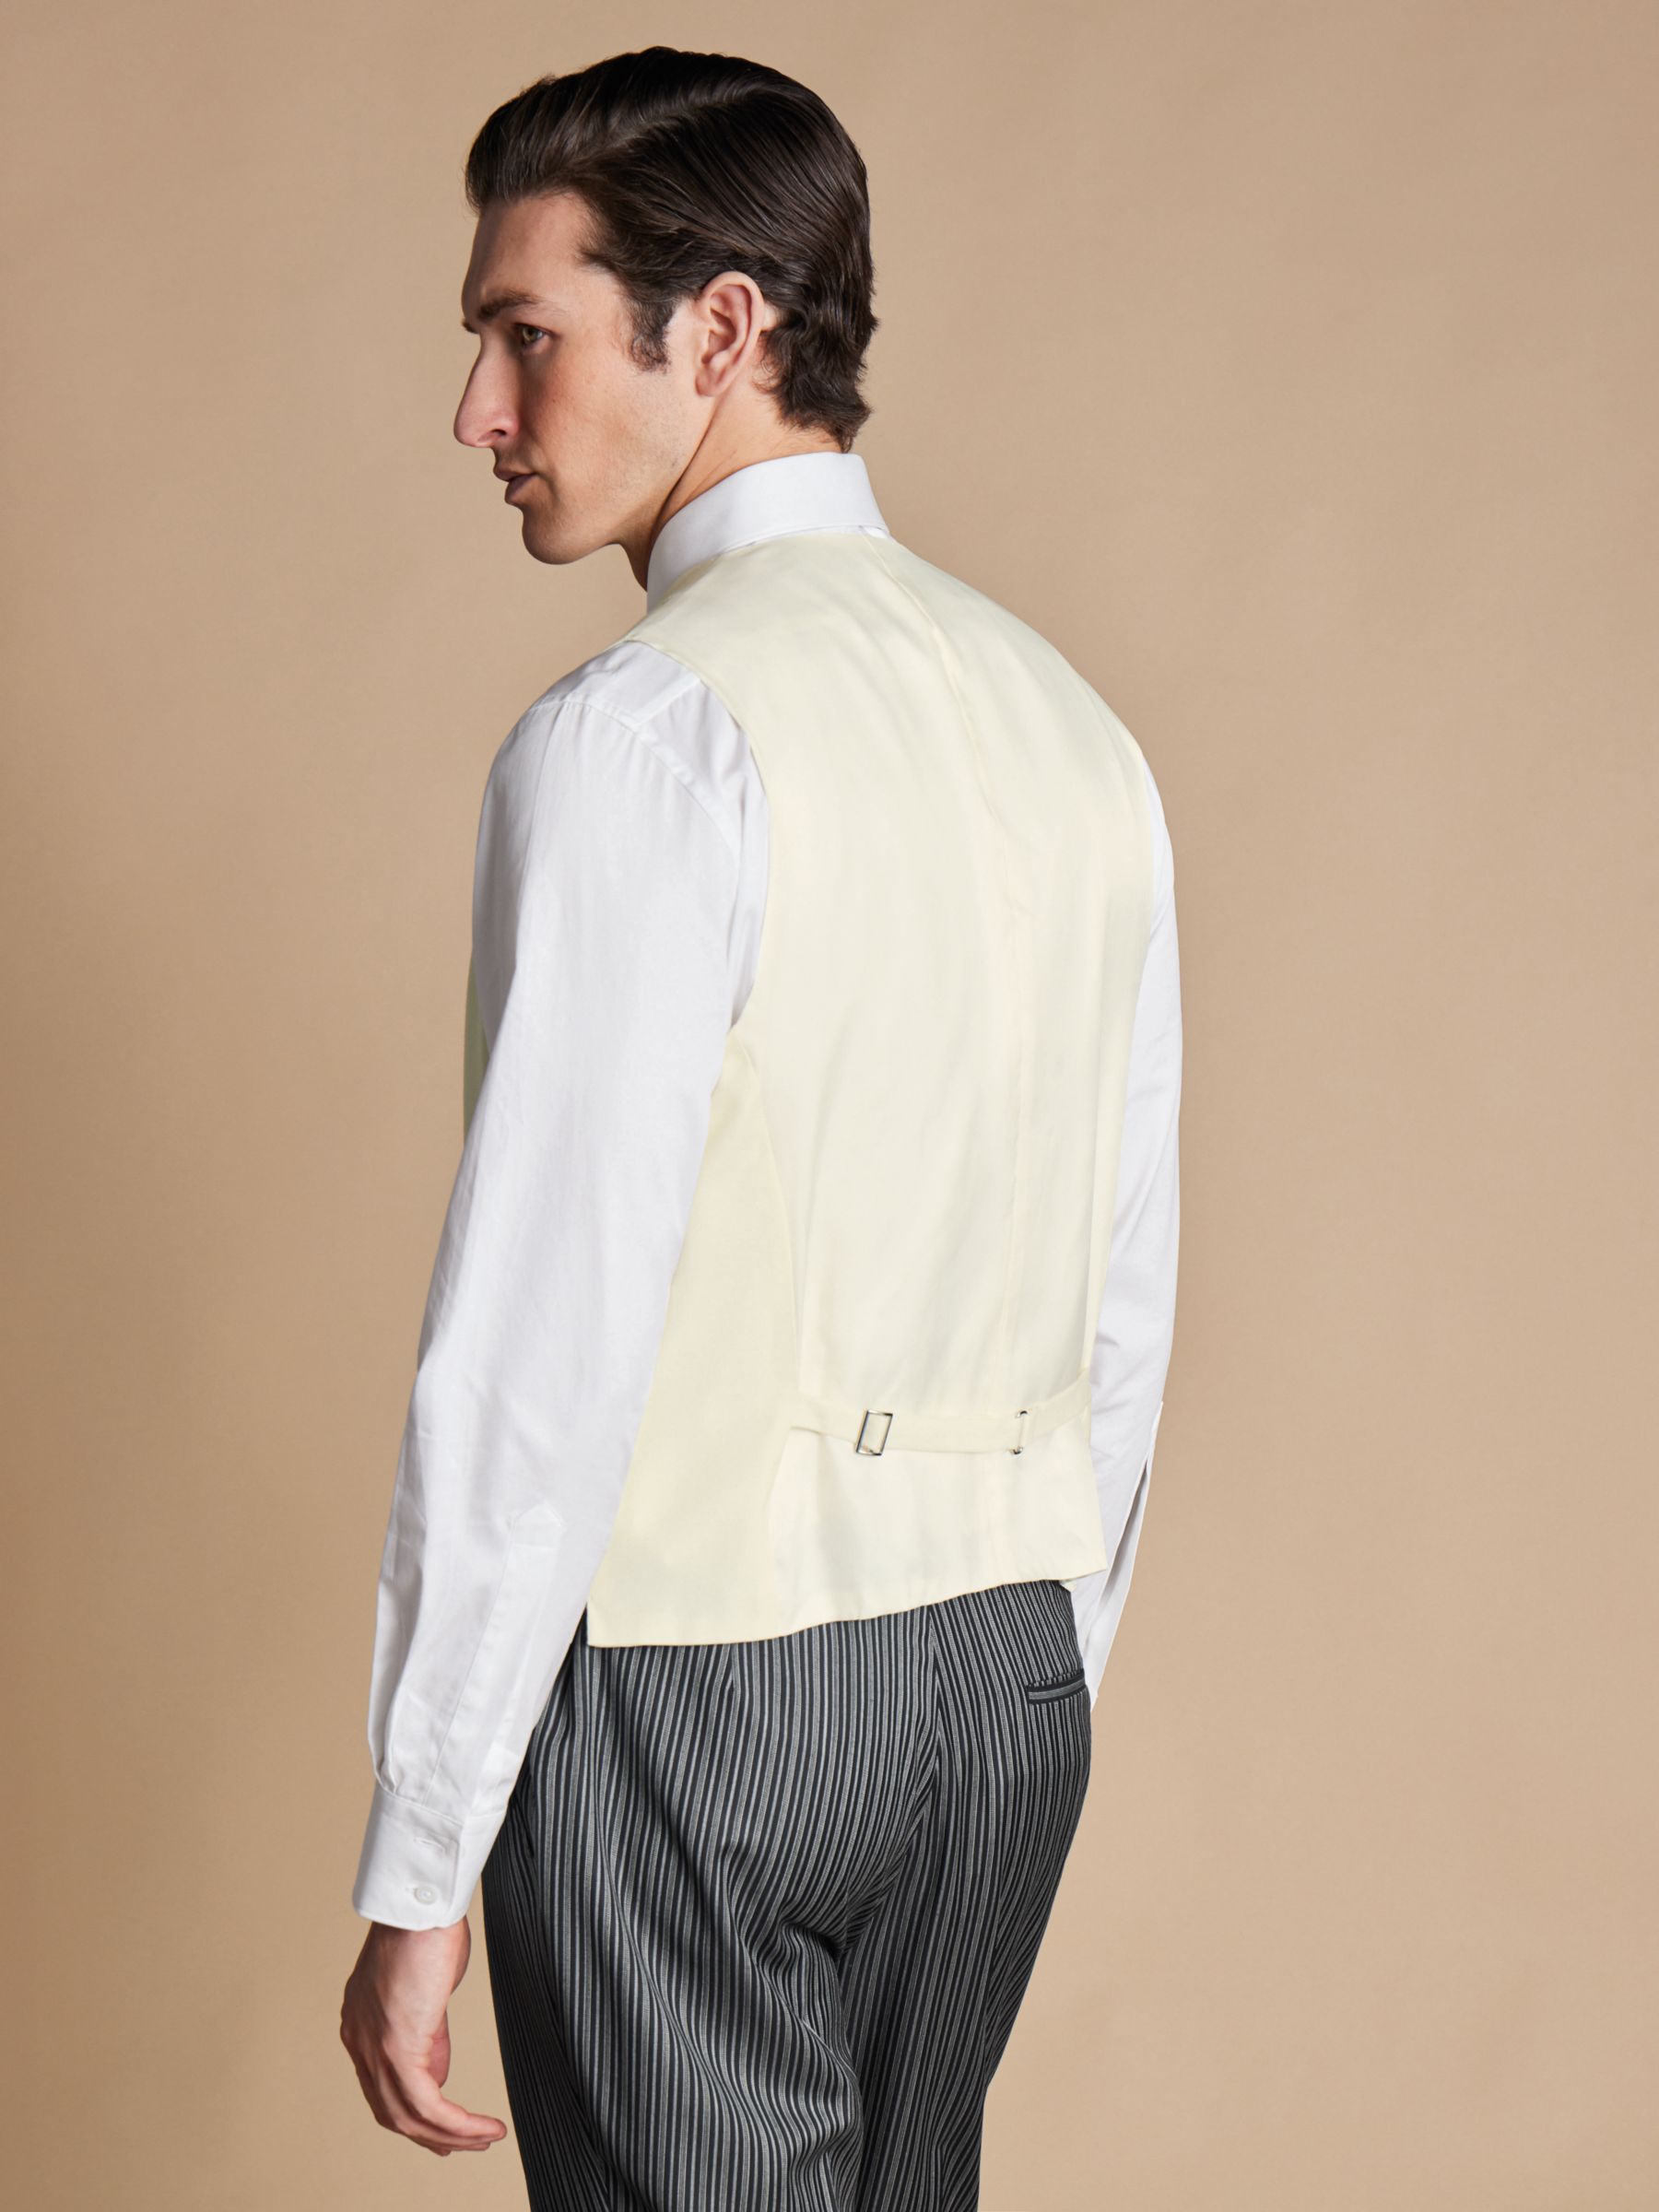 Charles Tyrwhitt Adjustable Slim Fit Morning Suit Wool Waistcoat, Cream, 36R